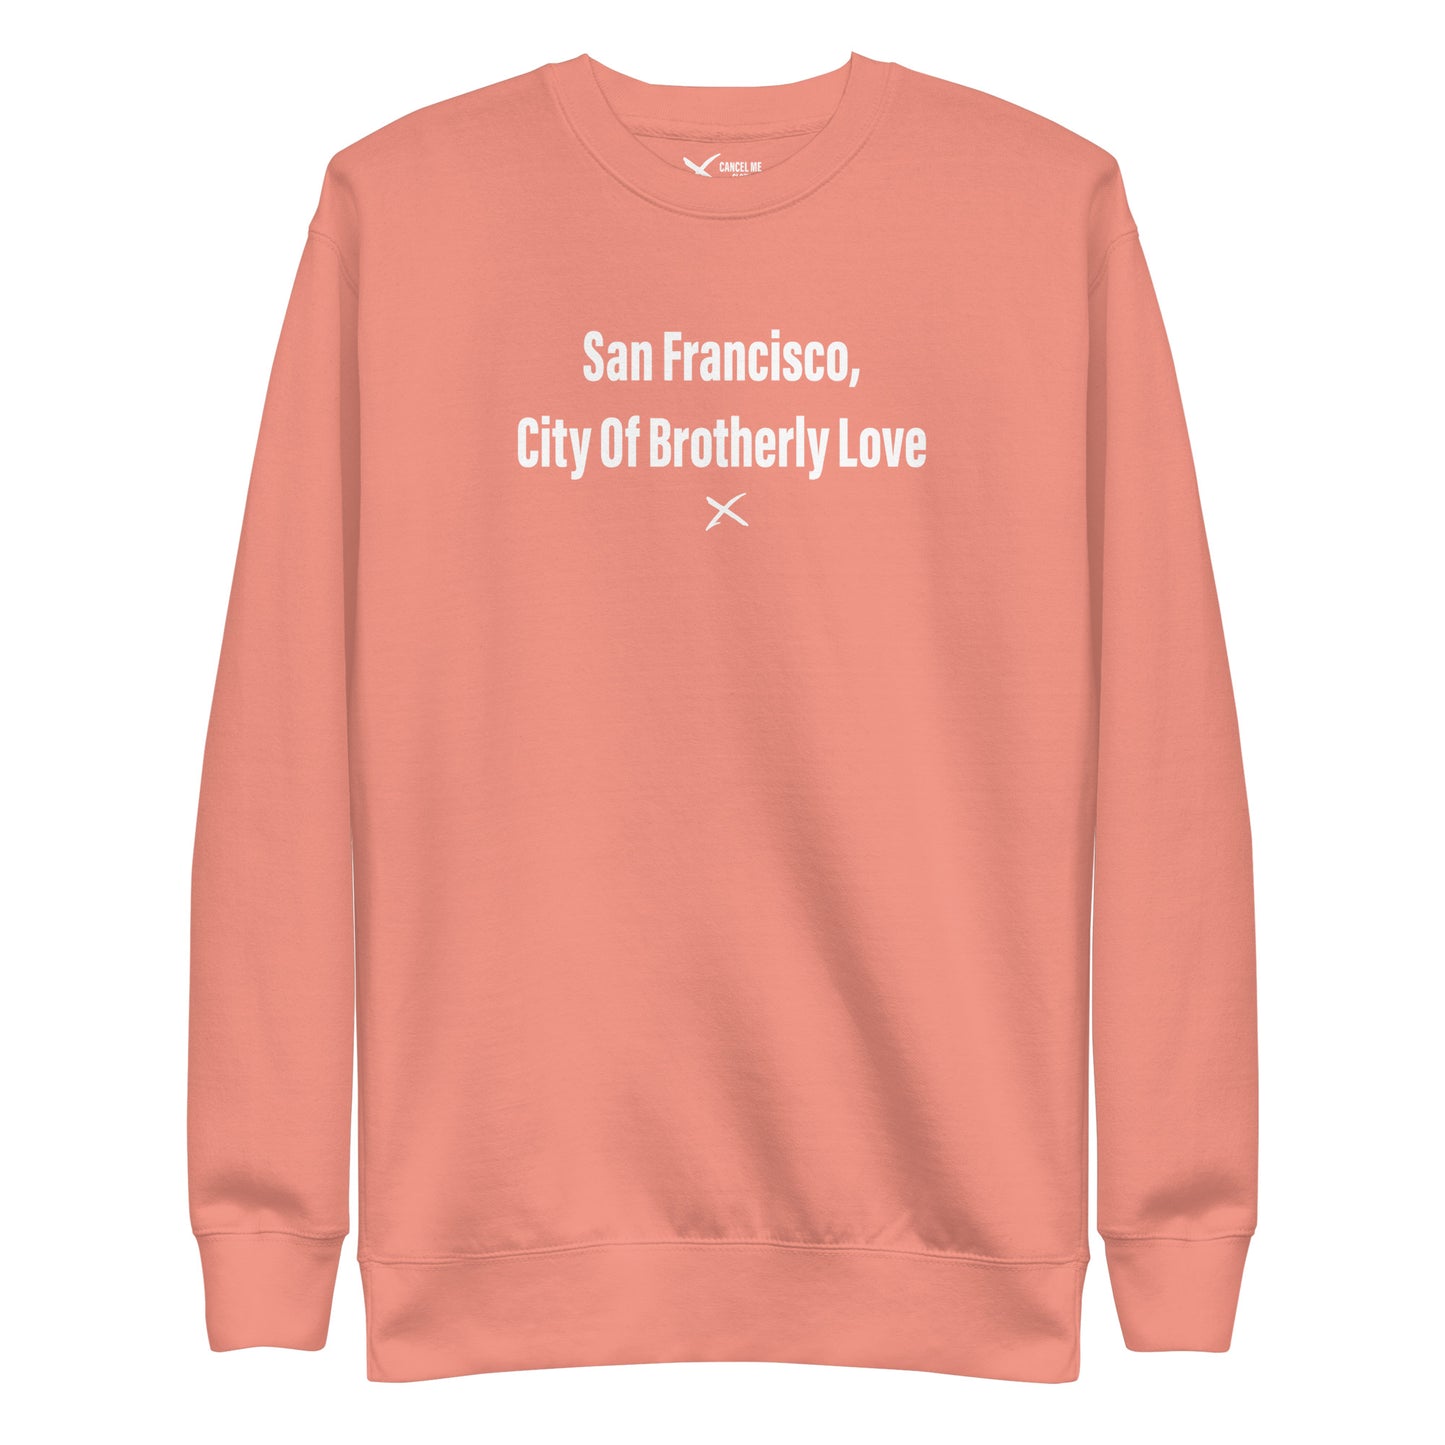 San Francisco, City Of Brotherly Love - Sweatshirt